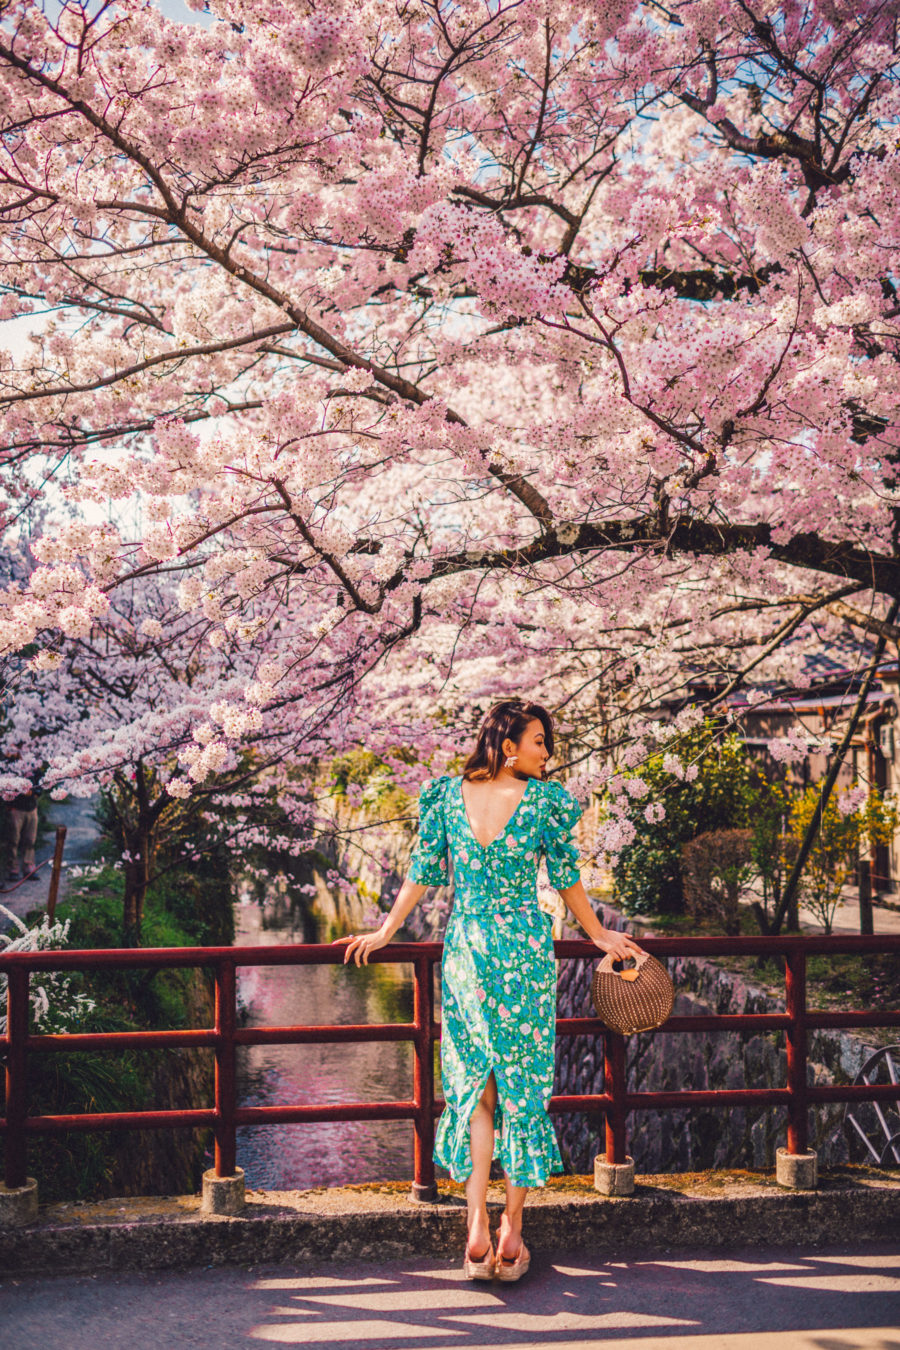 sakura viewing spots in Japan - Kyoto - Philosopher Path, luxury travel blogger // Notjessfashion.com